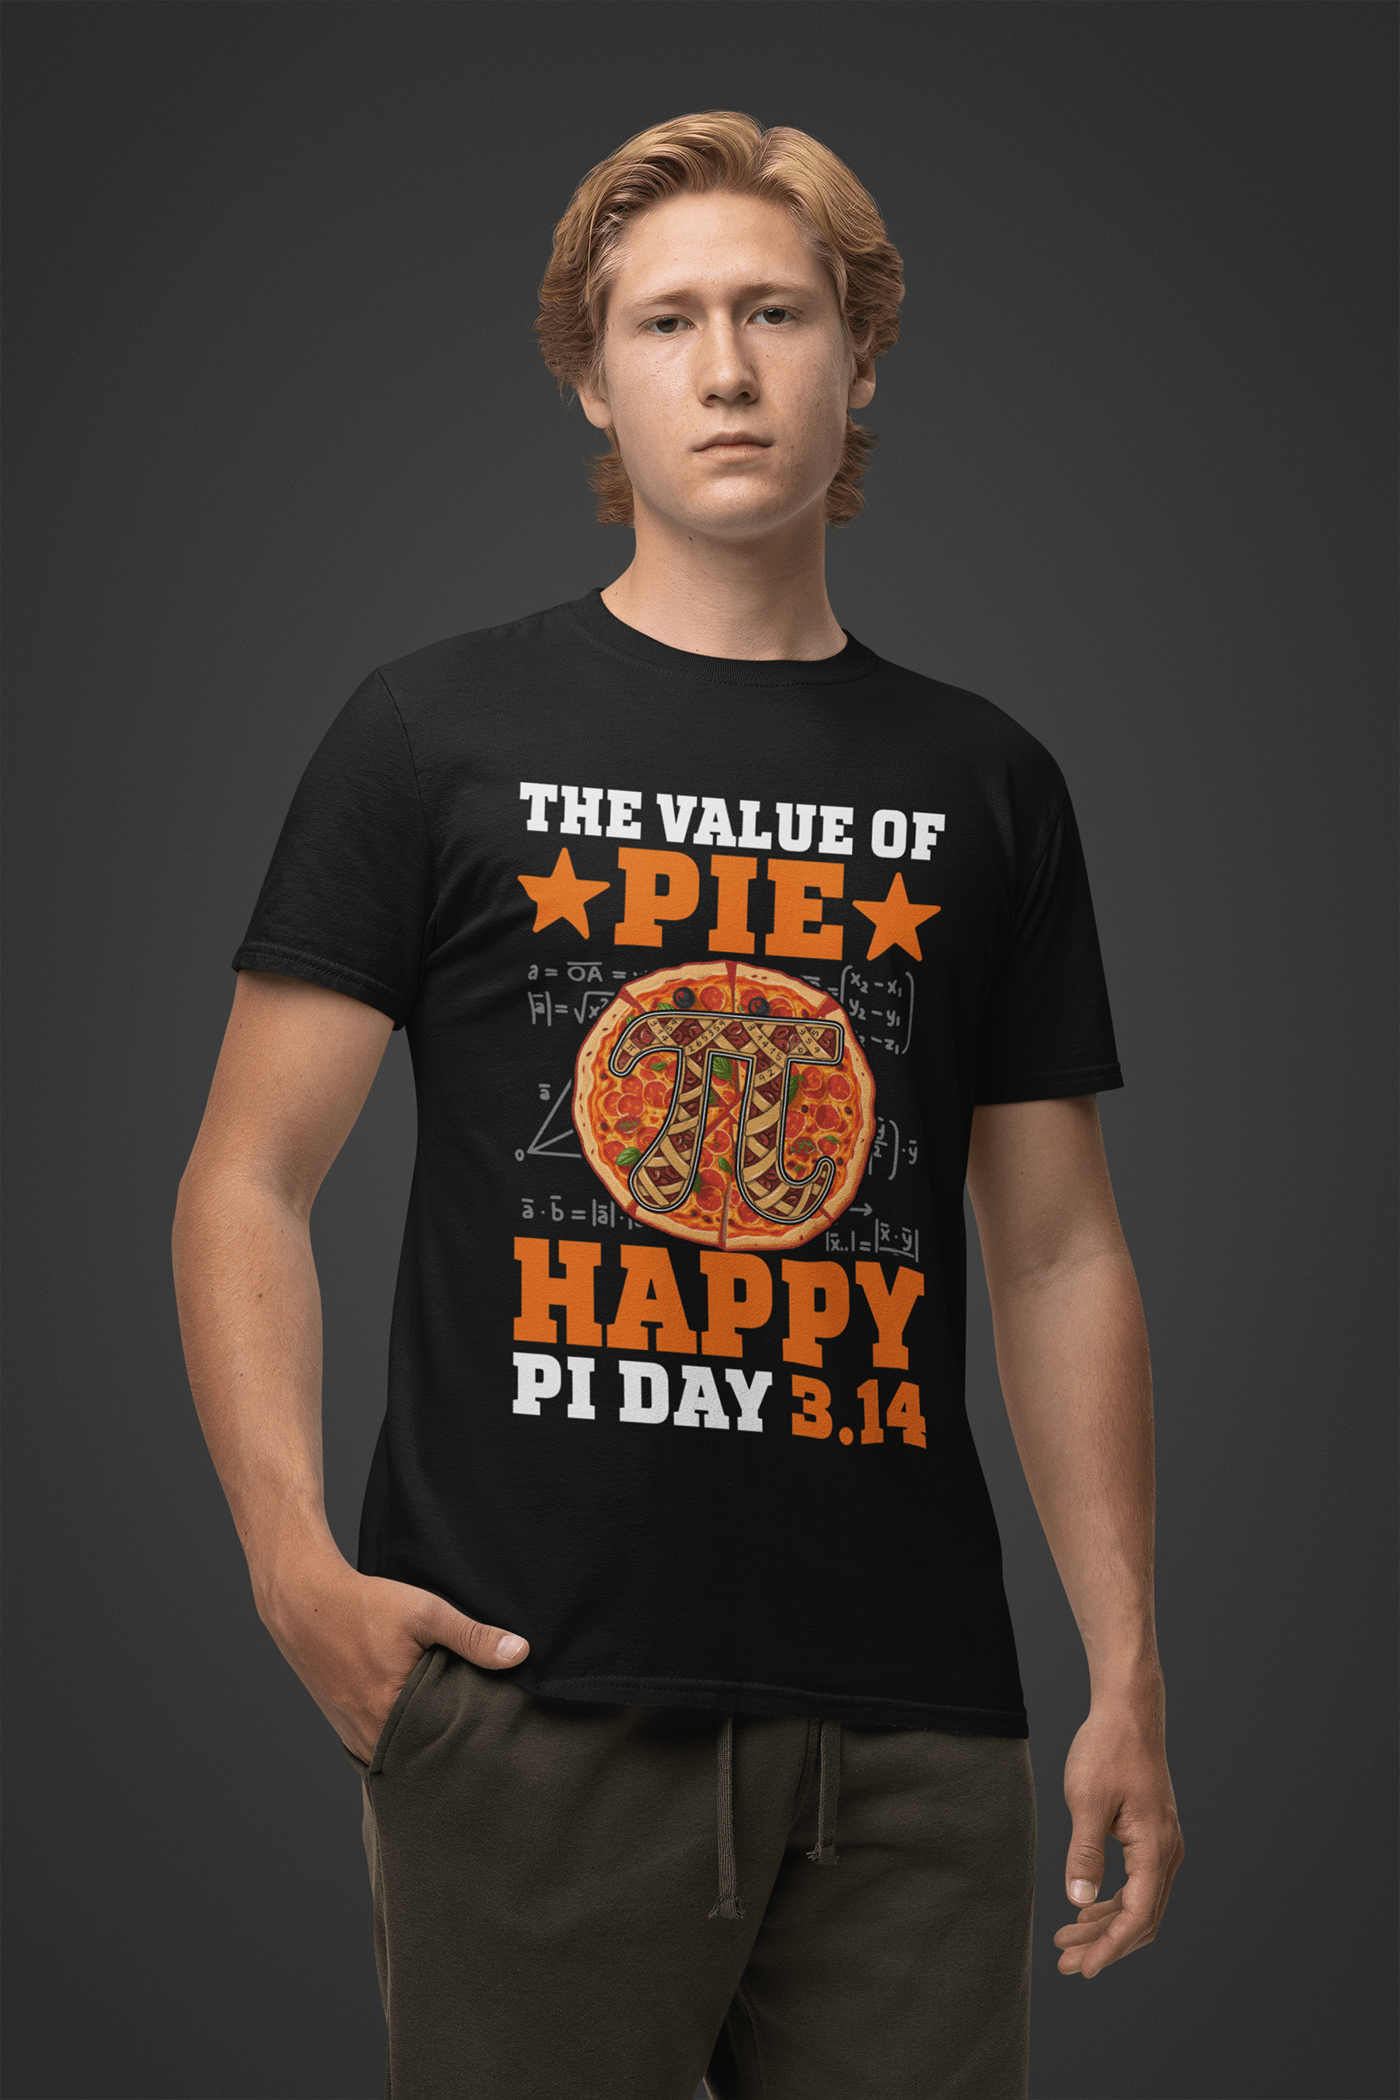 Pi Day T-Shirt Design